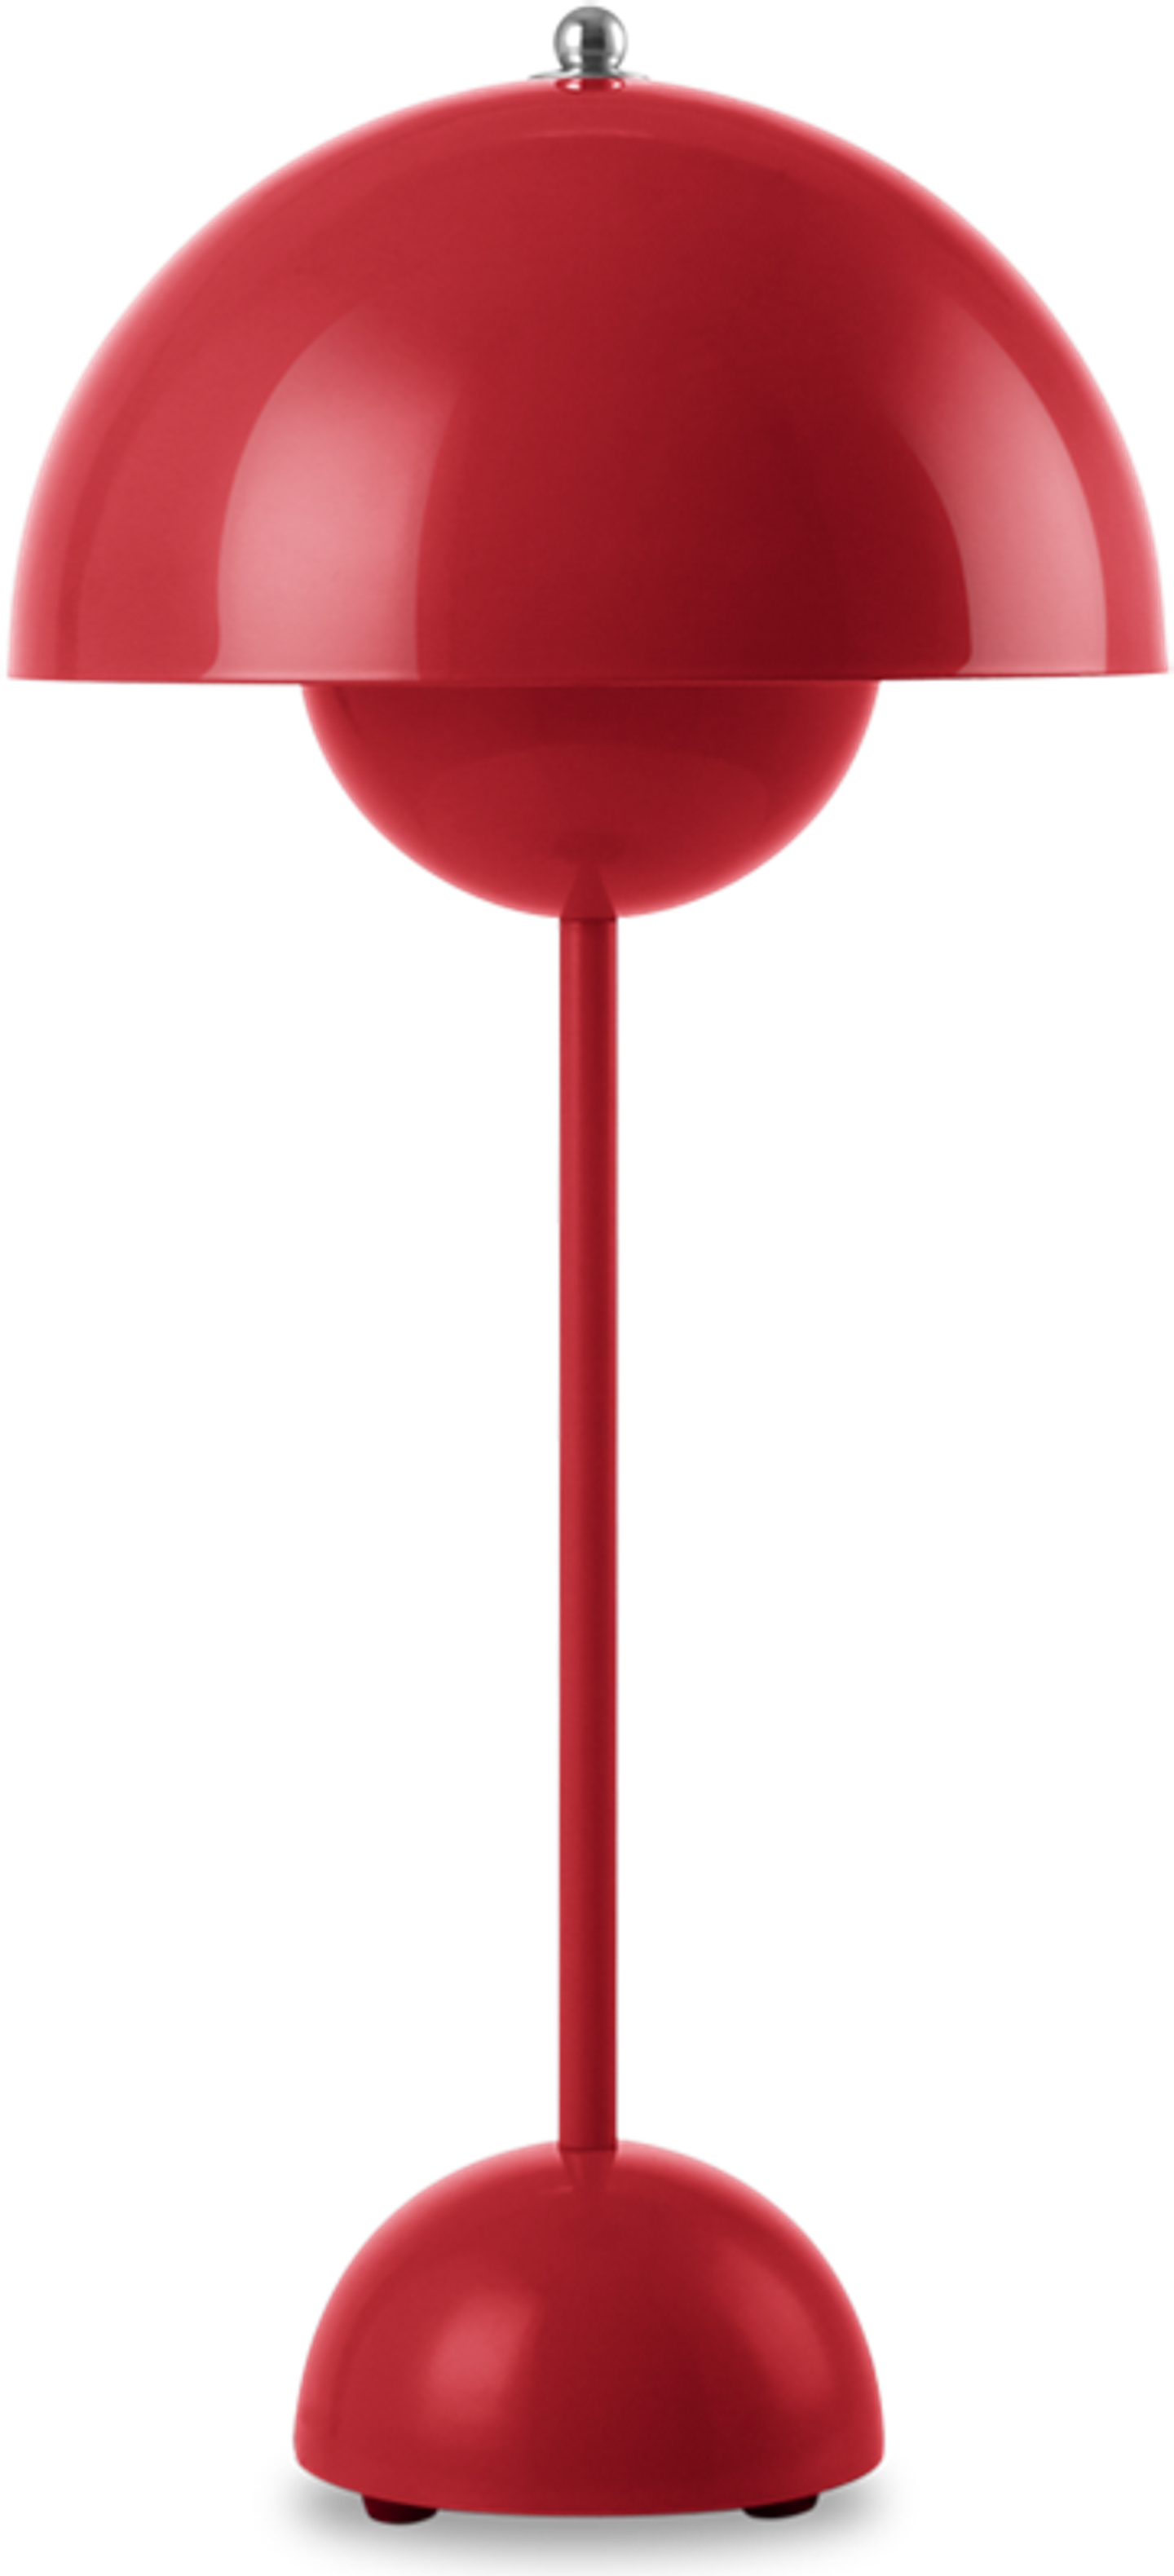 Tischlampe im Blumentopf-Stil Red image.